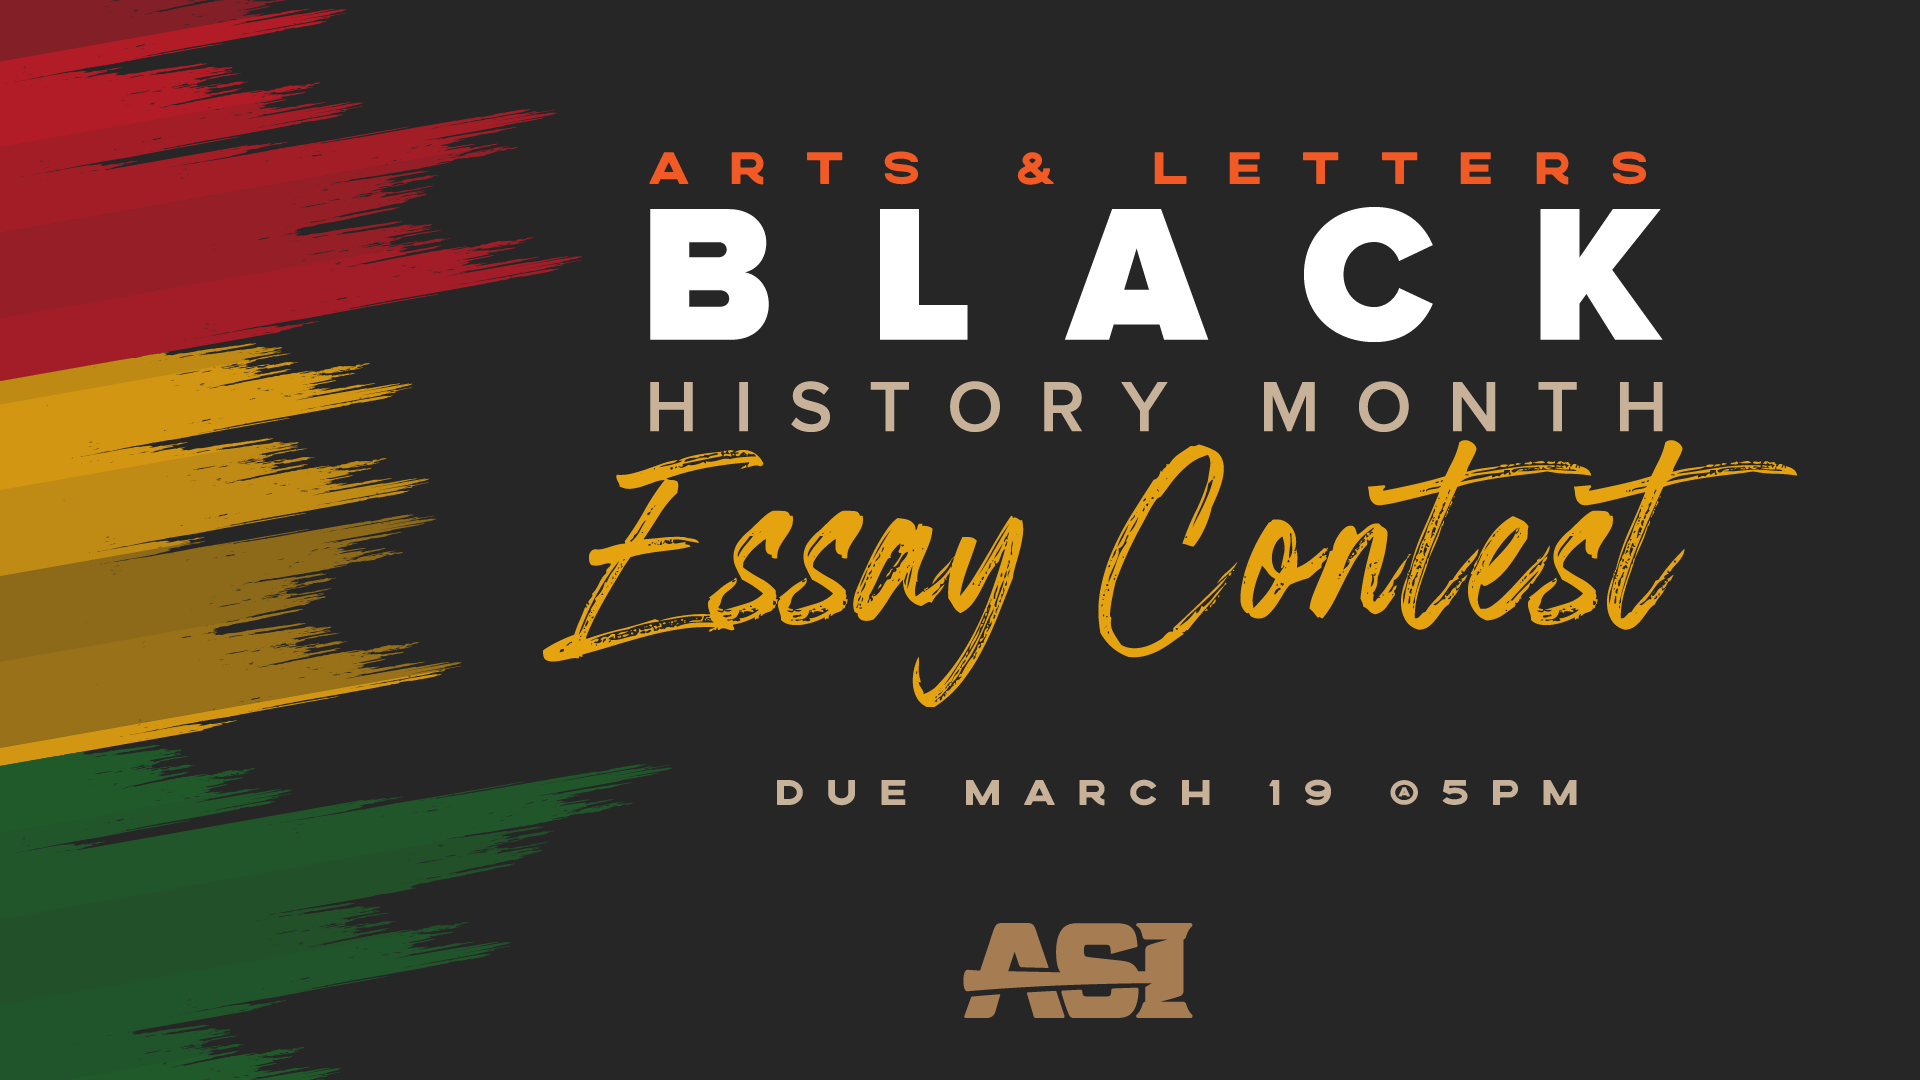 bloomington black history month essay contest